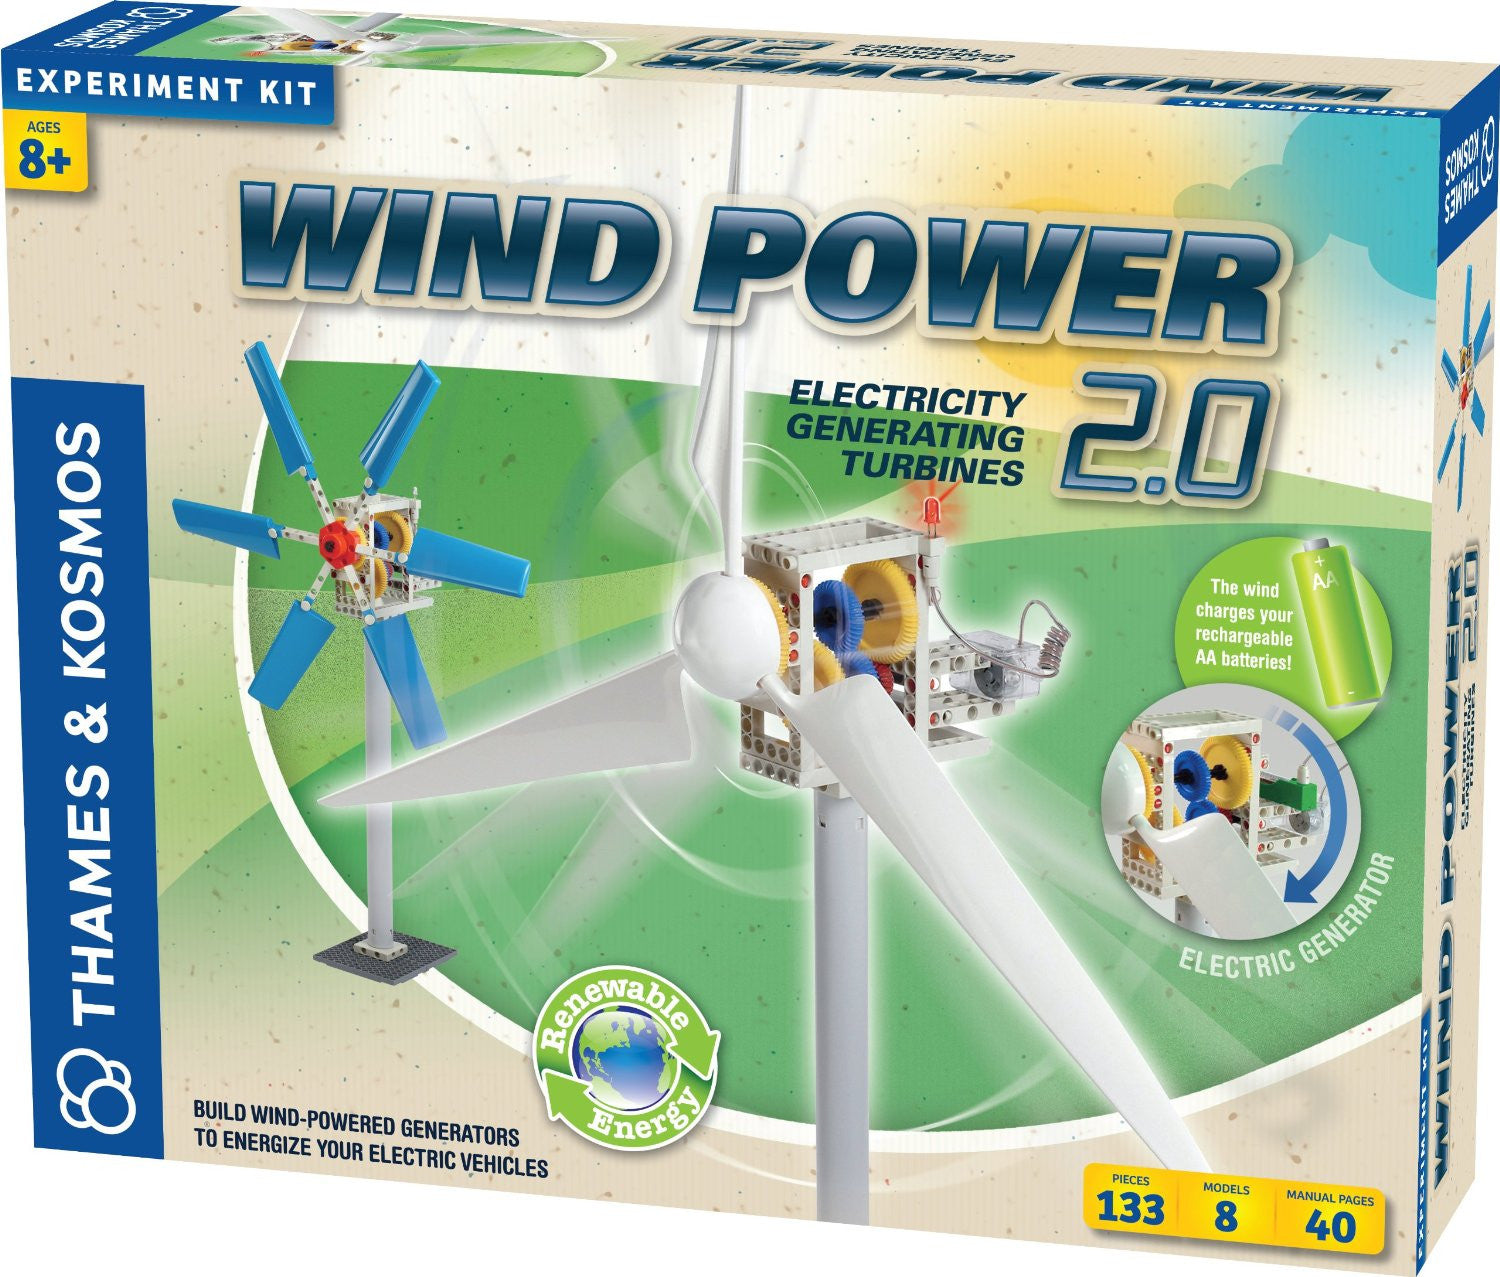 Wind Power 2.0